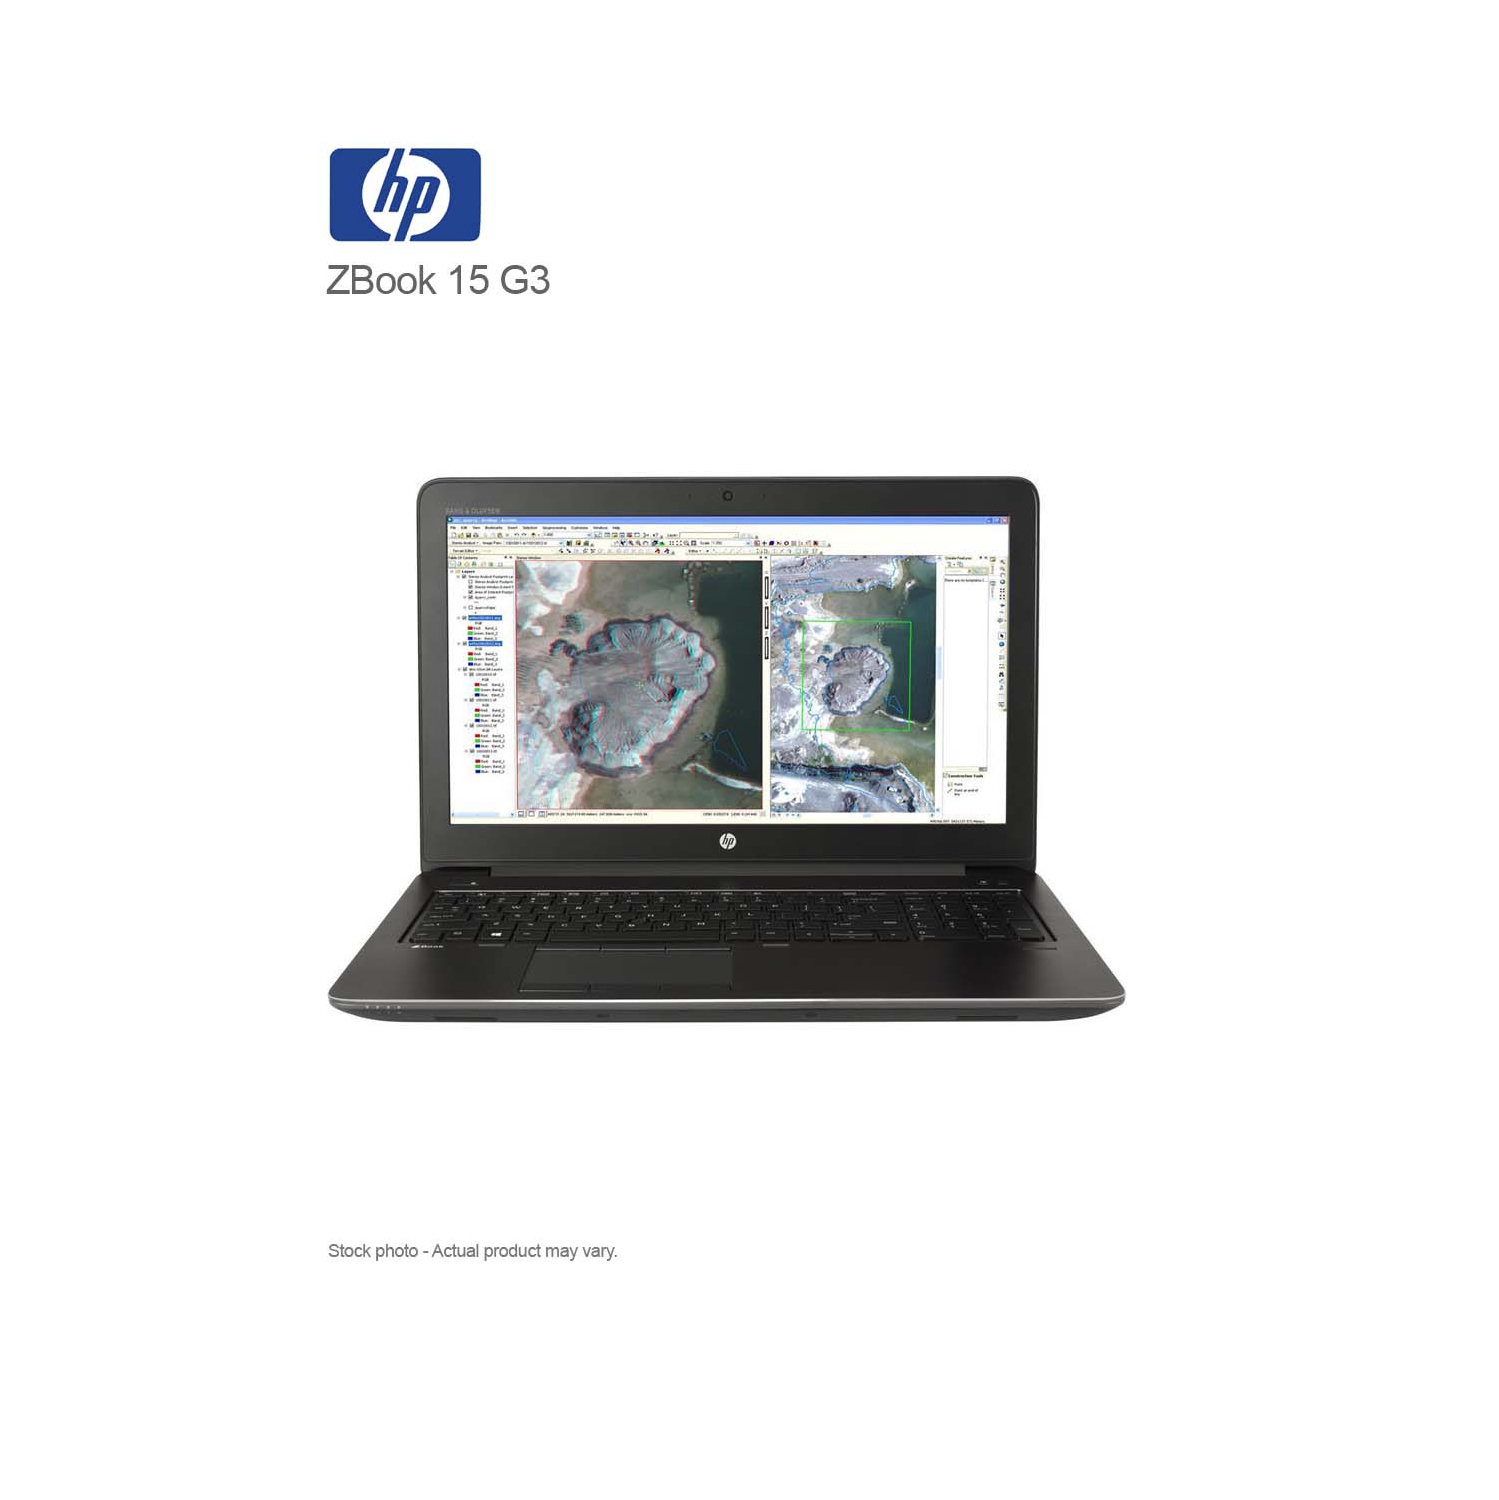 HP ZBook 15 G3 Core i7-6700HQ, 64GB, 1 TB NVMe, 15.6″FHD, WIN 10 PRO - Refurbished